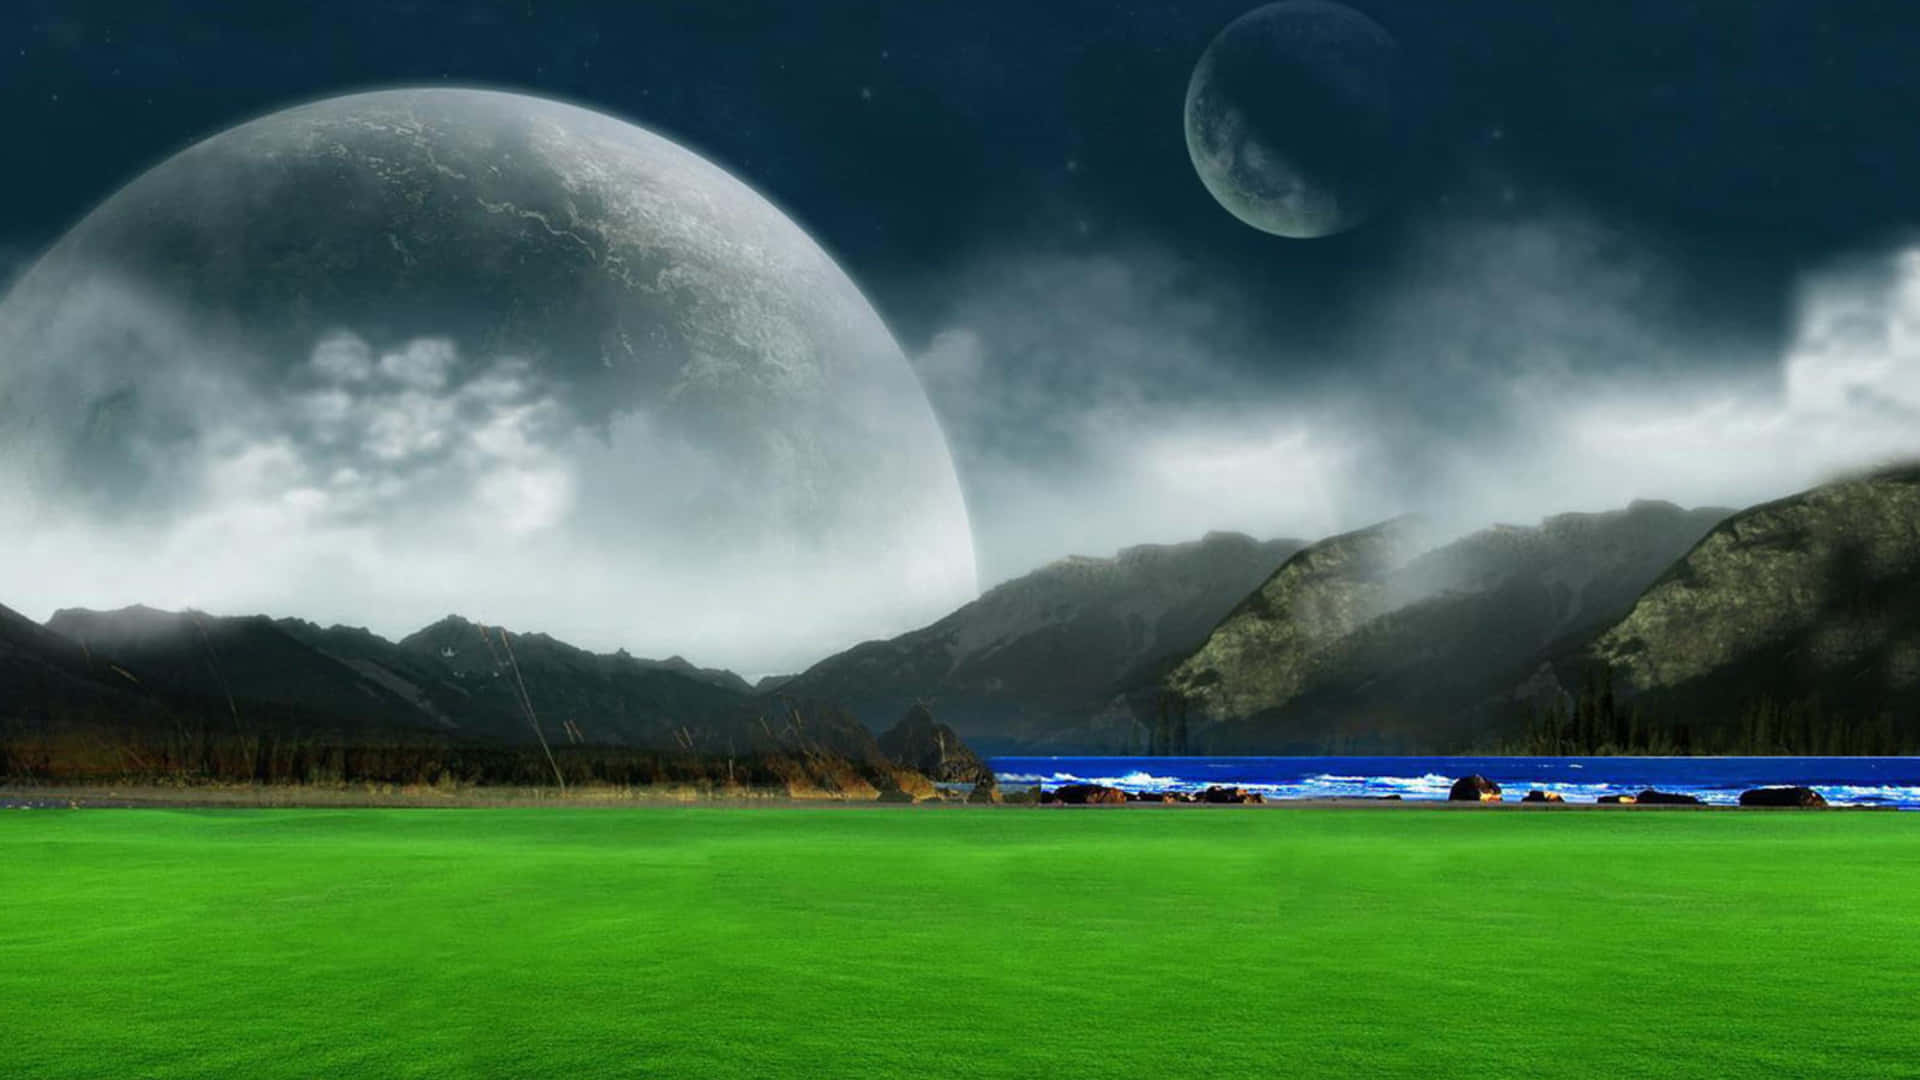 Caption: Mystical Moon Landscape Wallpaper